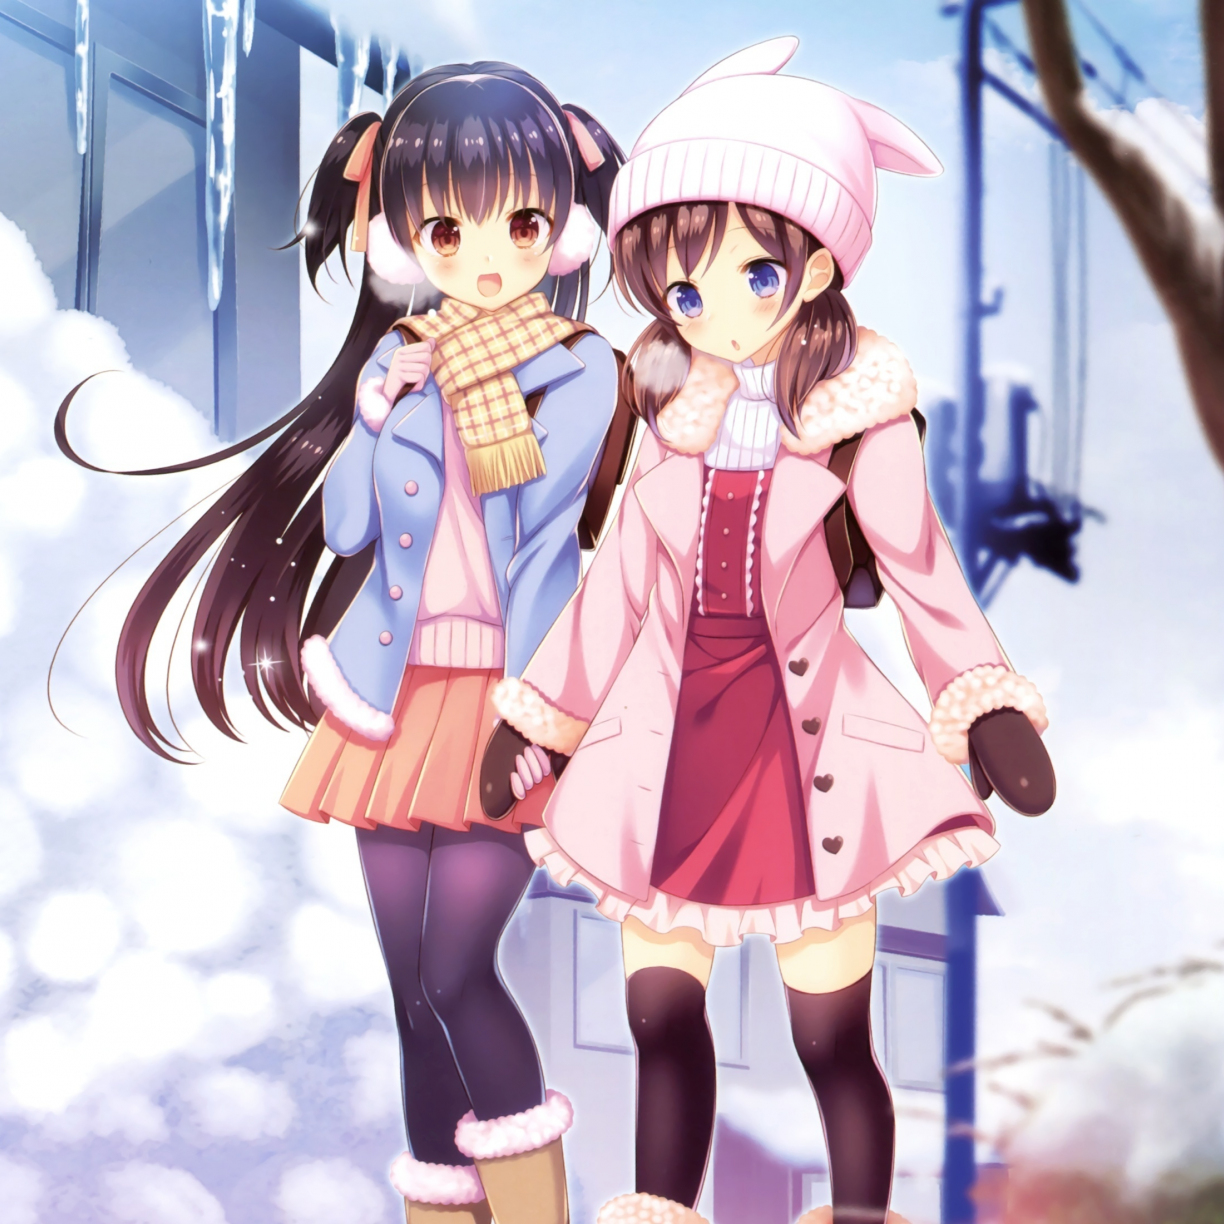 Wallpaper winter, outdoor, girls, anime, friends desktop wallpaper, HD image, picture, background, c09a24